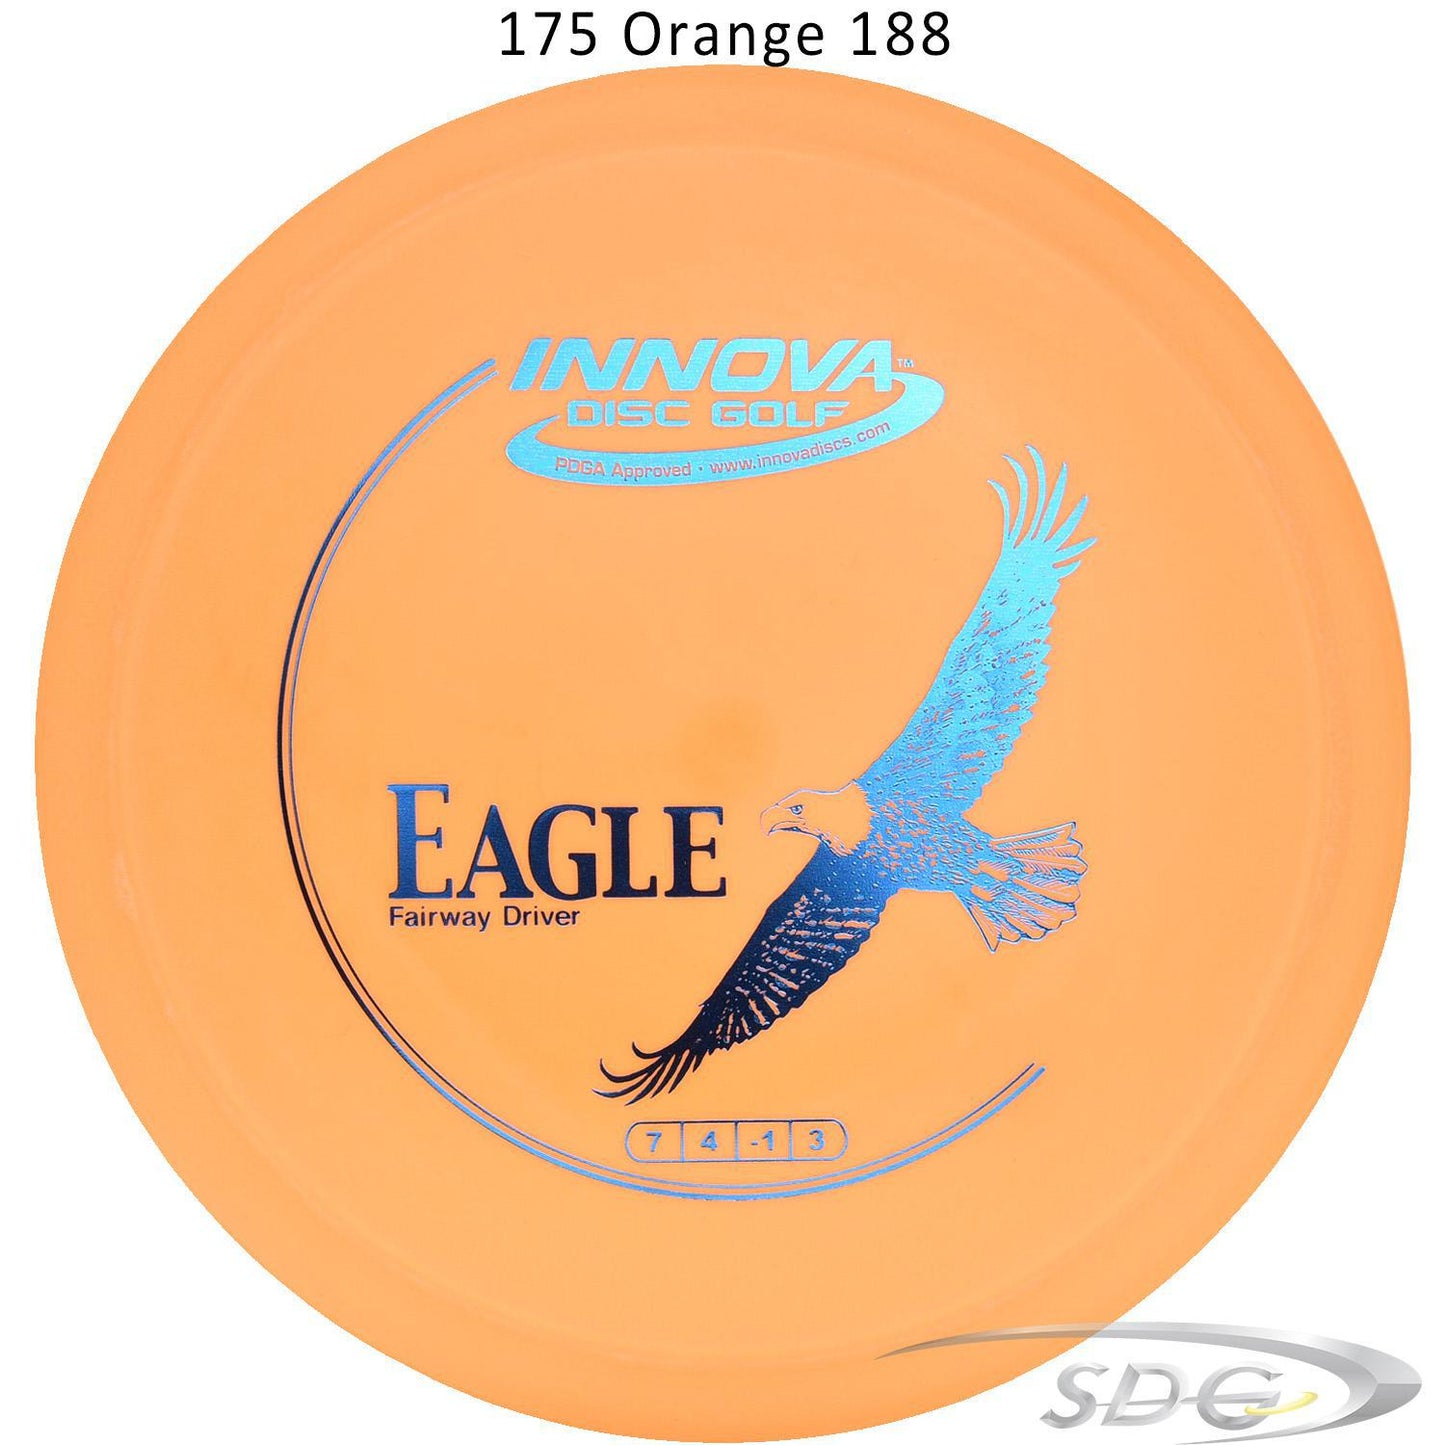 innova-dx-eagle-disc-golf-fairway-driver 175 Orange 188